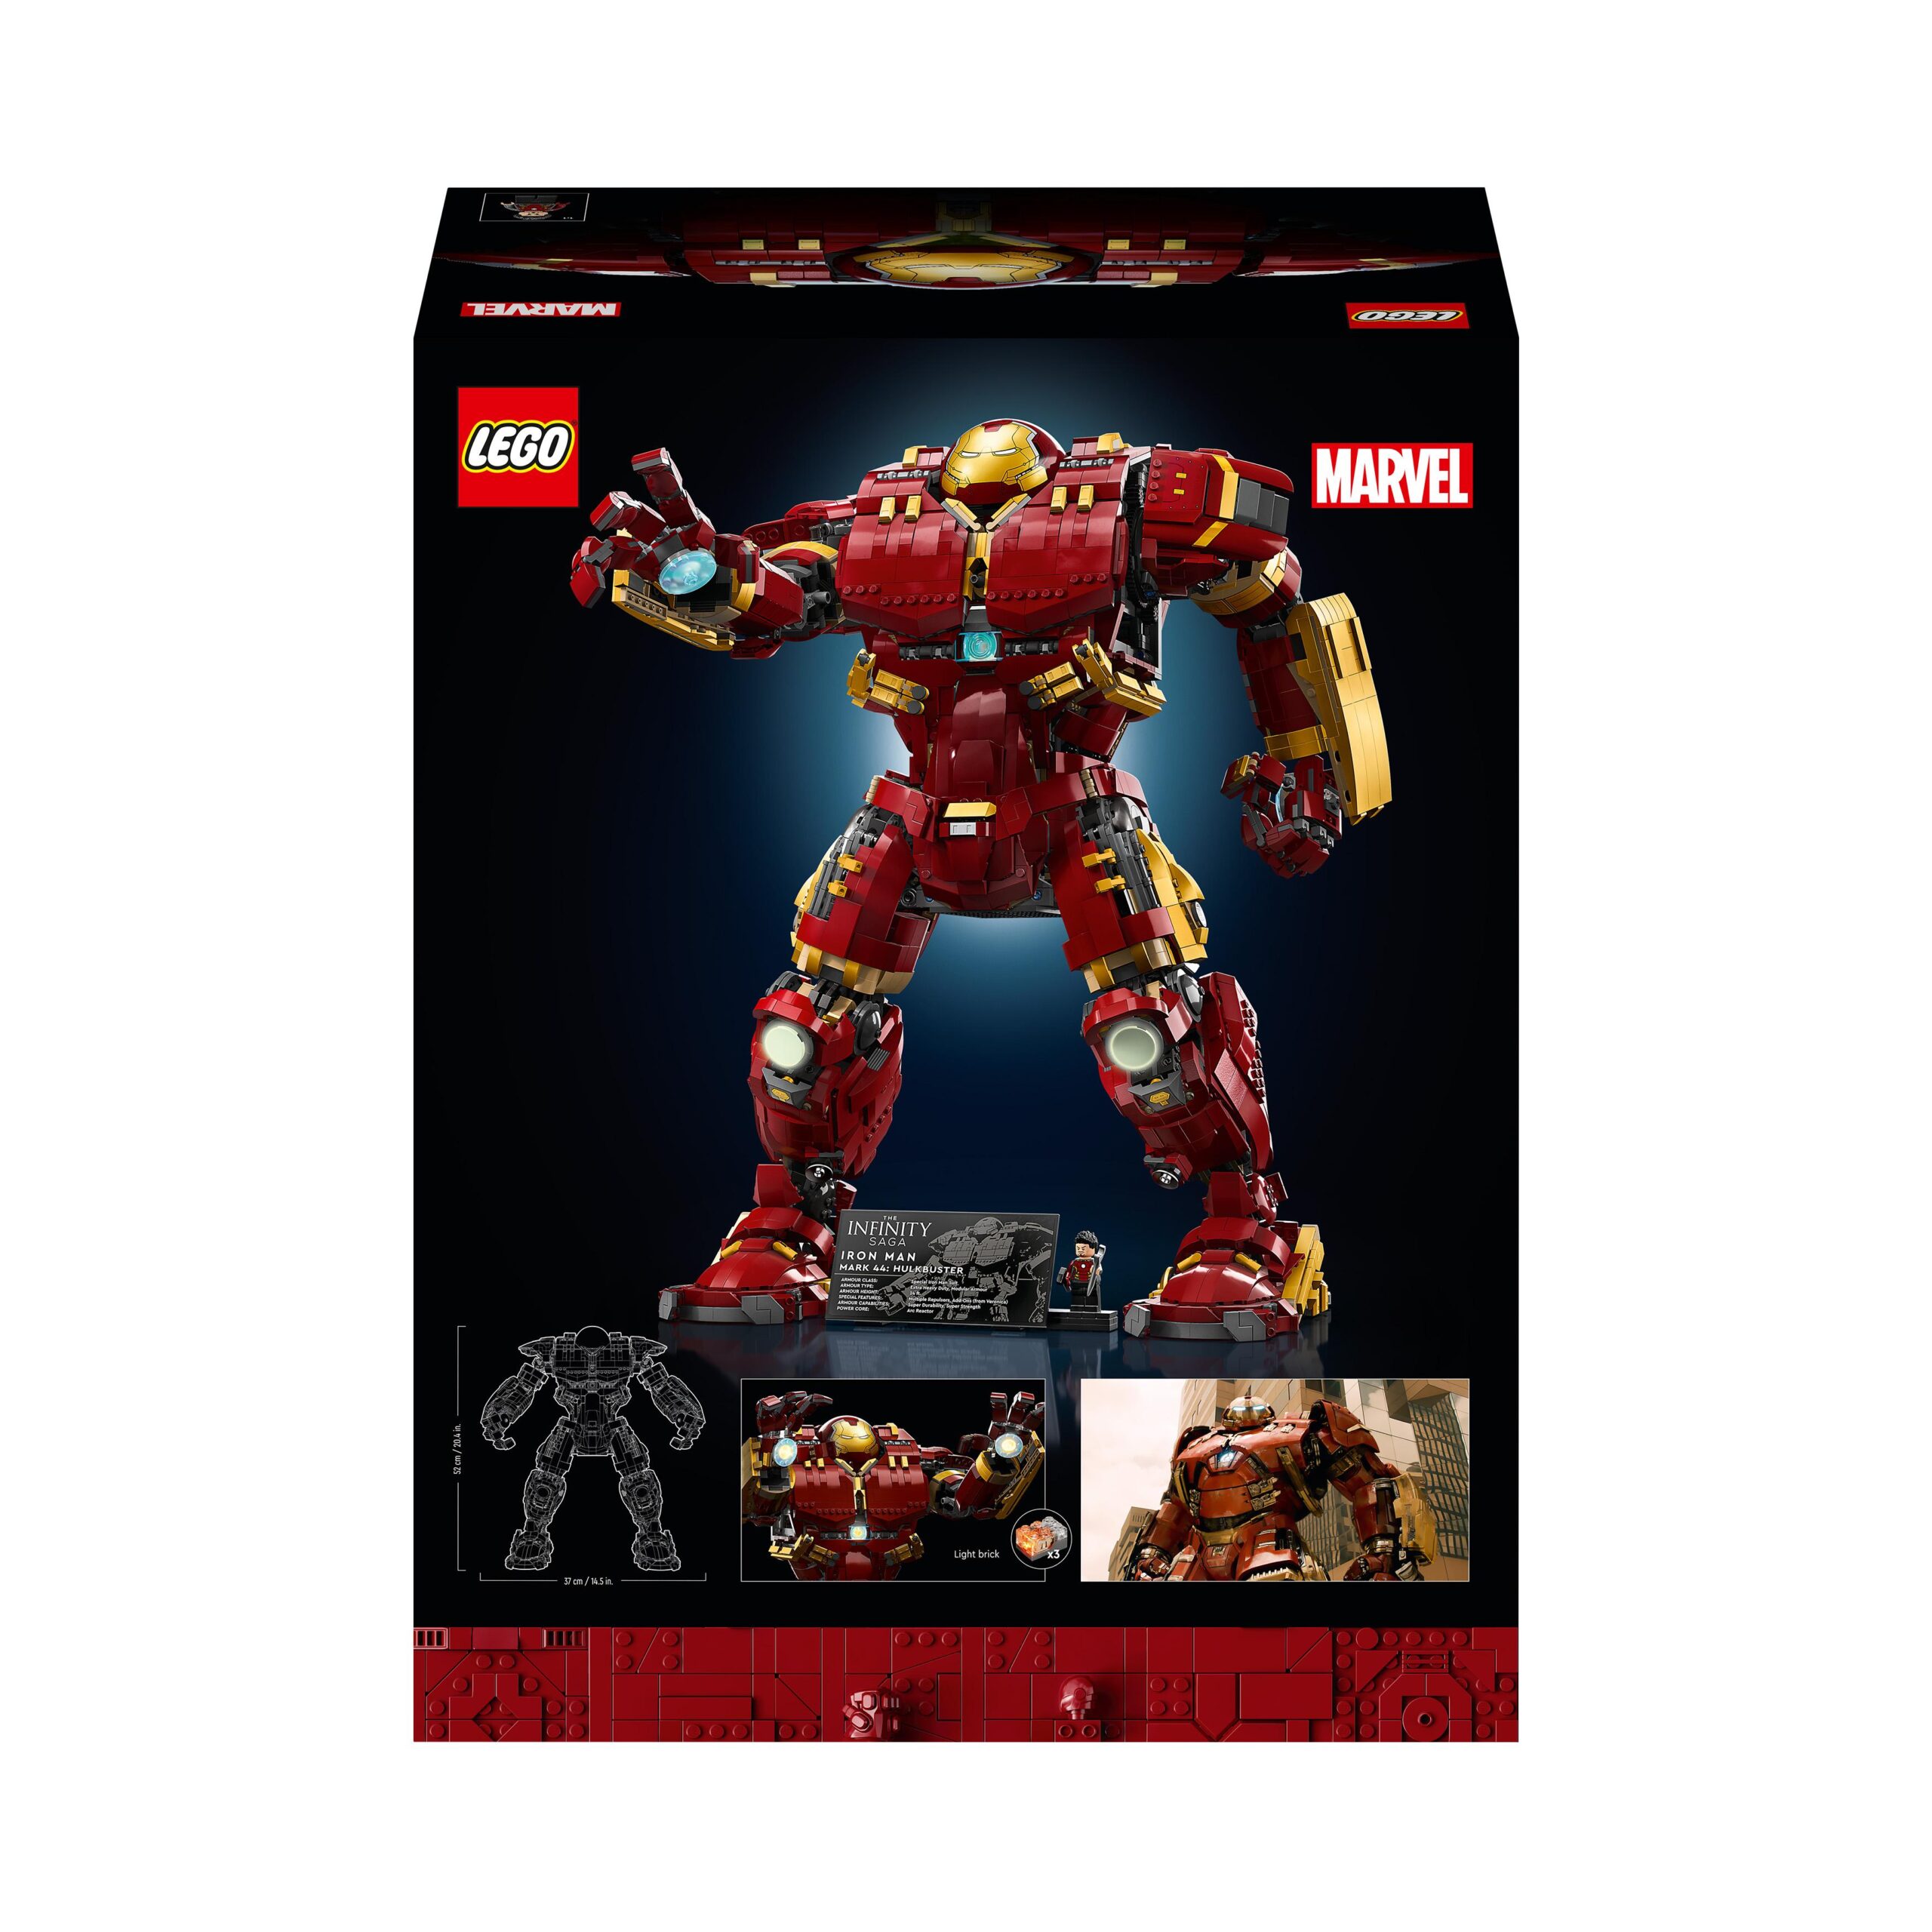 Lego marvel 76210 hulkbuster, grande mech mk44 del supereroe iron man da avengers age of ultron con minifigure di tony stark - LEGO SUPER HEROES